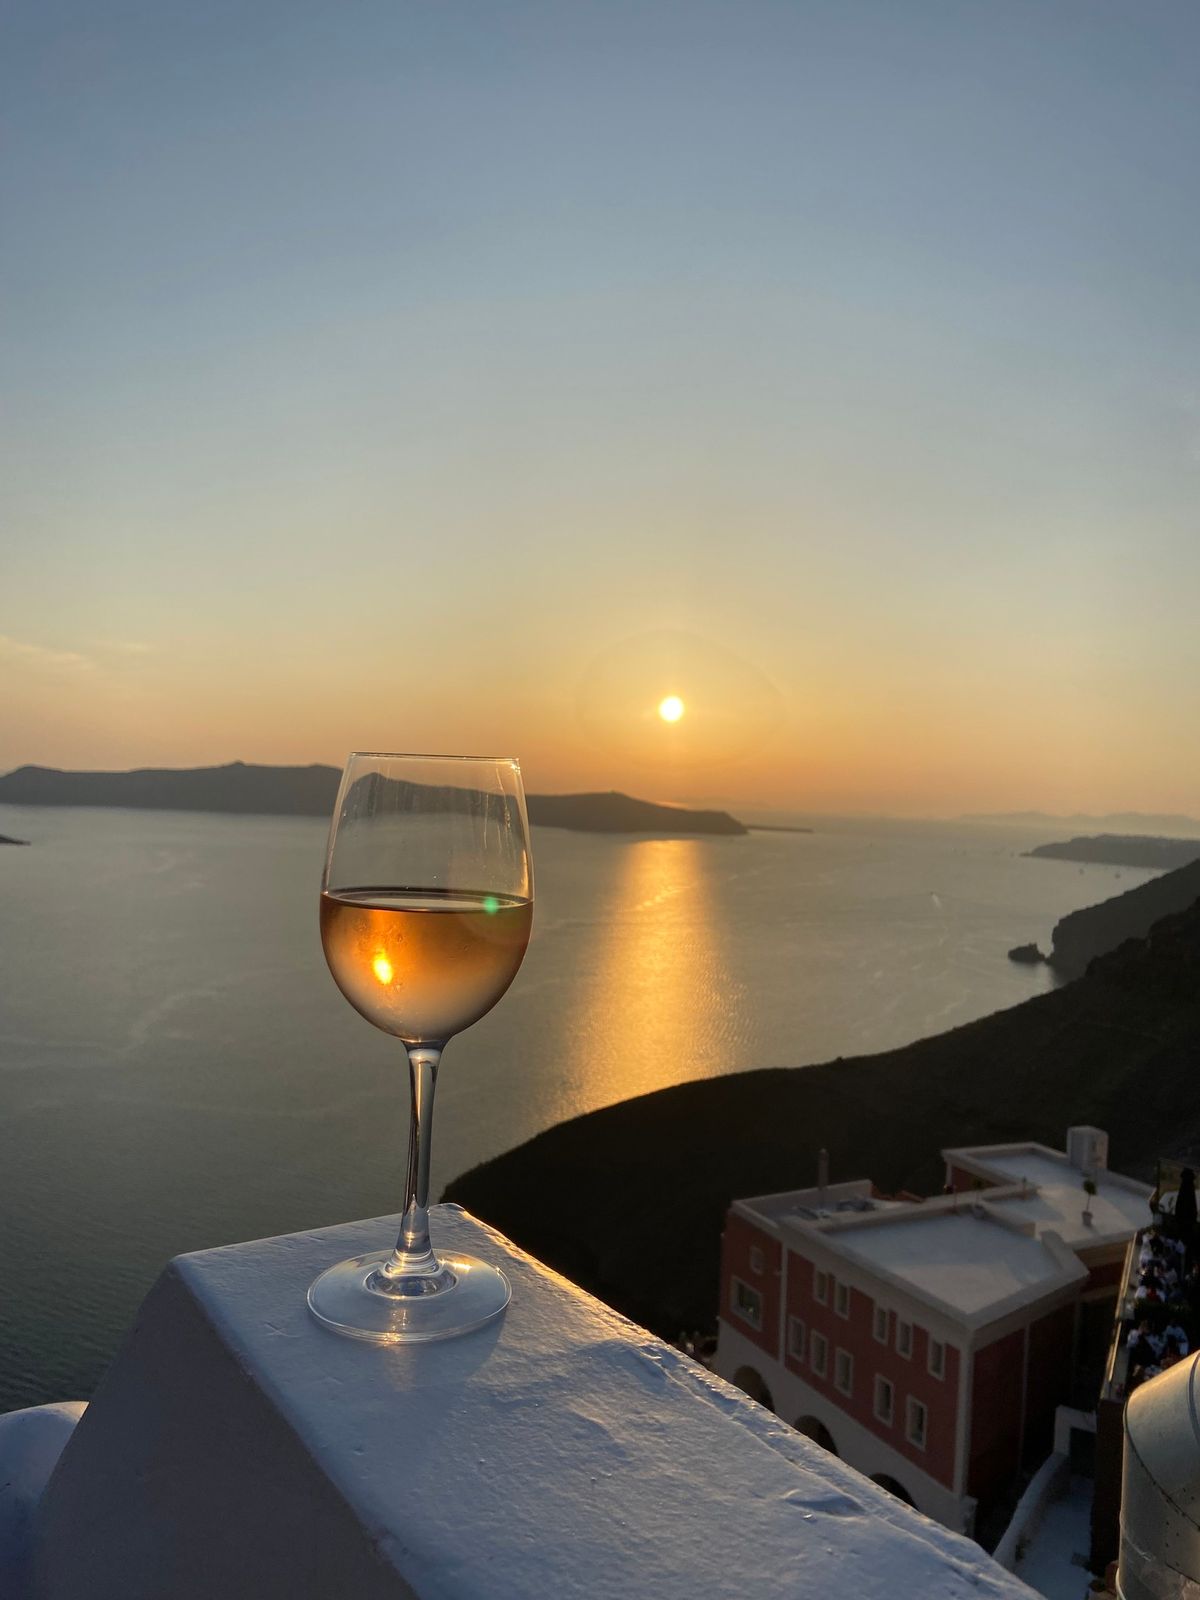 Vineyard Tours and Tasting in Santorini \ud83c\uddec\ud83c\uddf7 